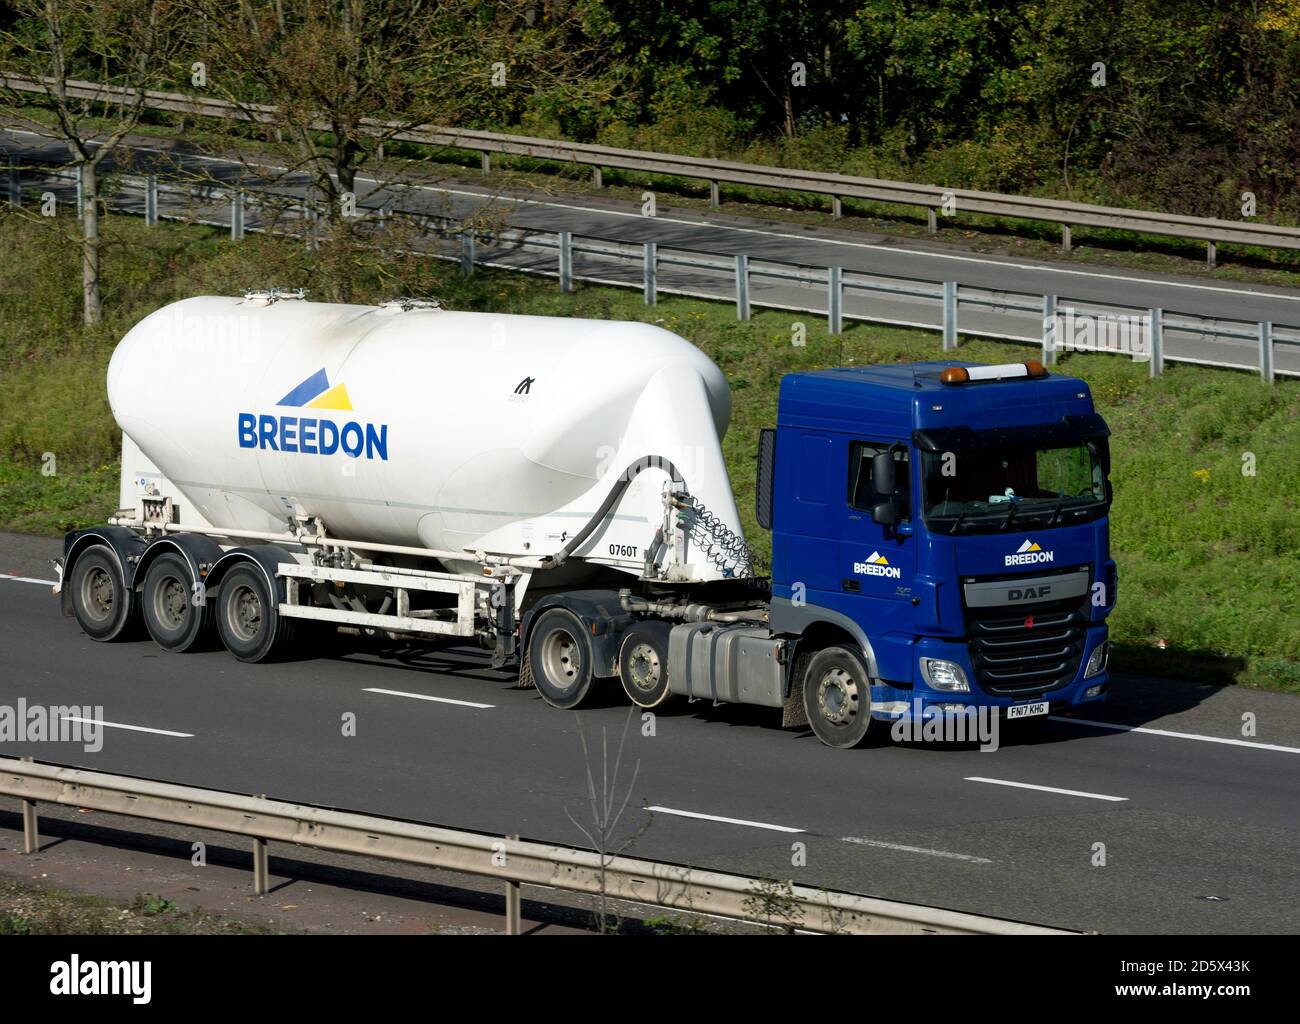 A Breedon tanker lorry on the M40 motorway, Warwickshire, UK Stock Photo